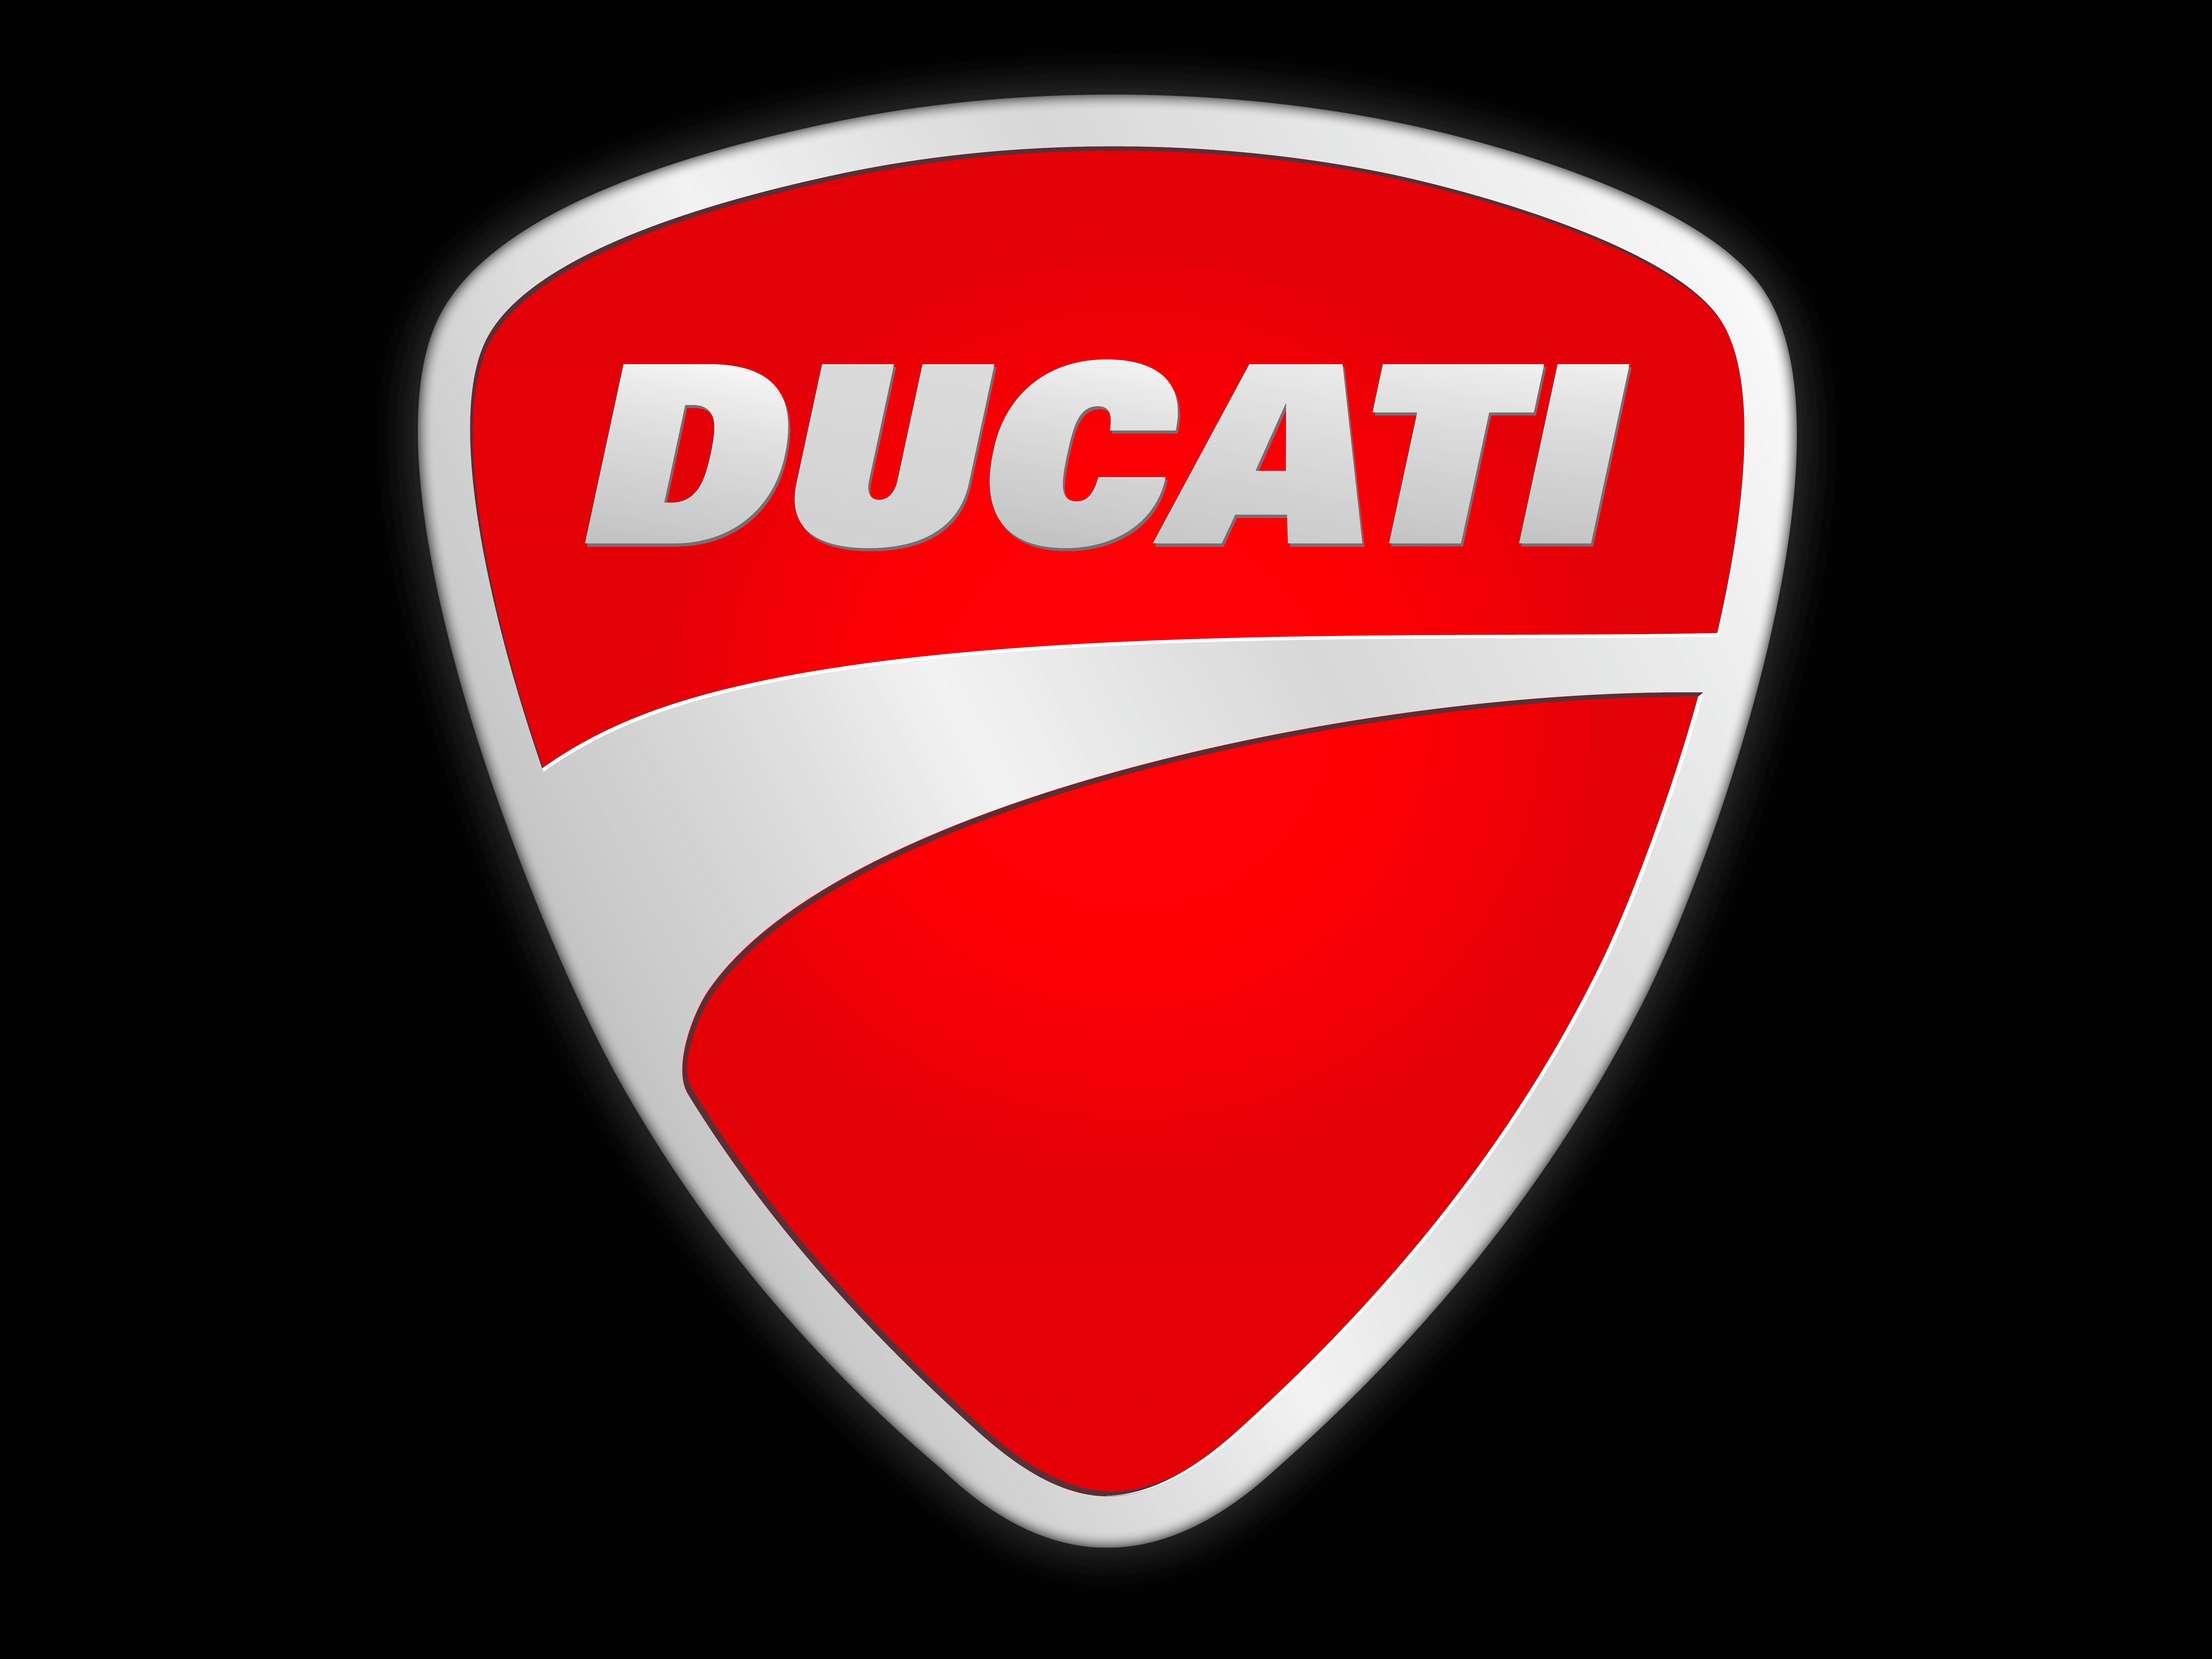 Ducati Logo - Ducati Logo | Motorcycle Logos | Pinterest | Ducati, Motorcycle logo ...